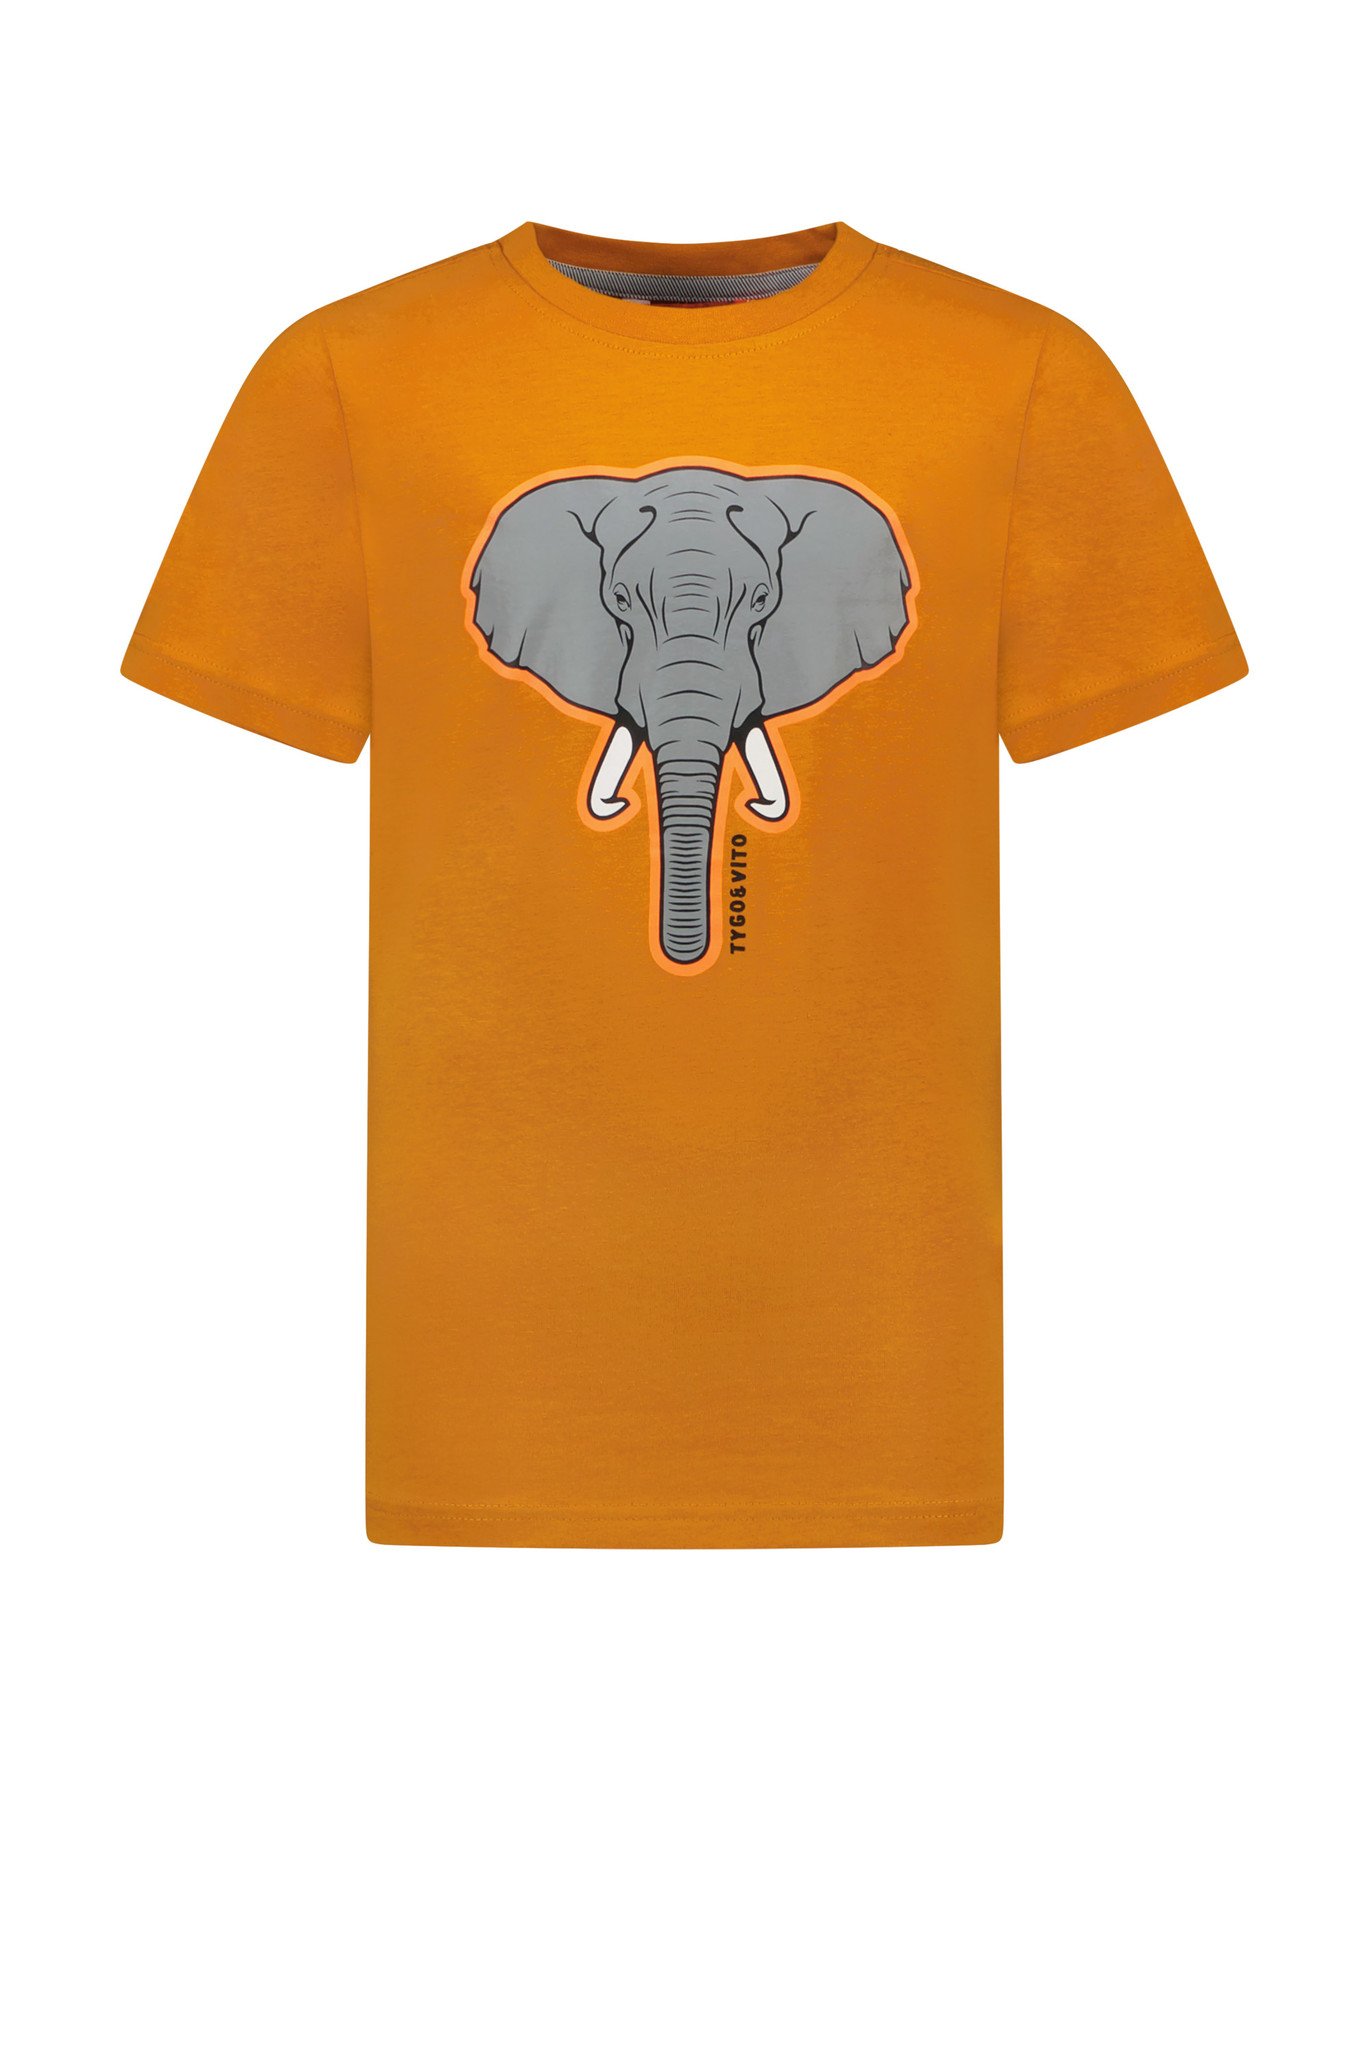 Tygo & Vito Jongens t-shirt olifant - Goud geel